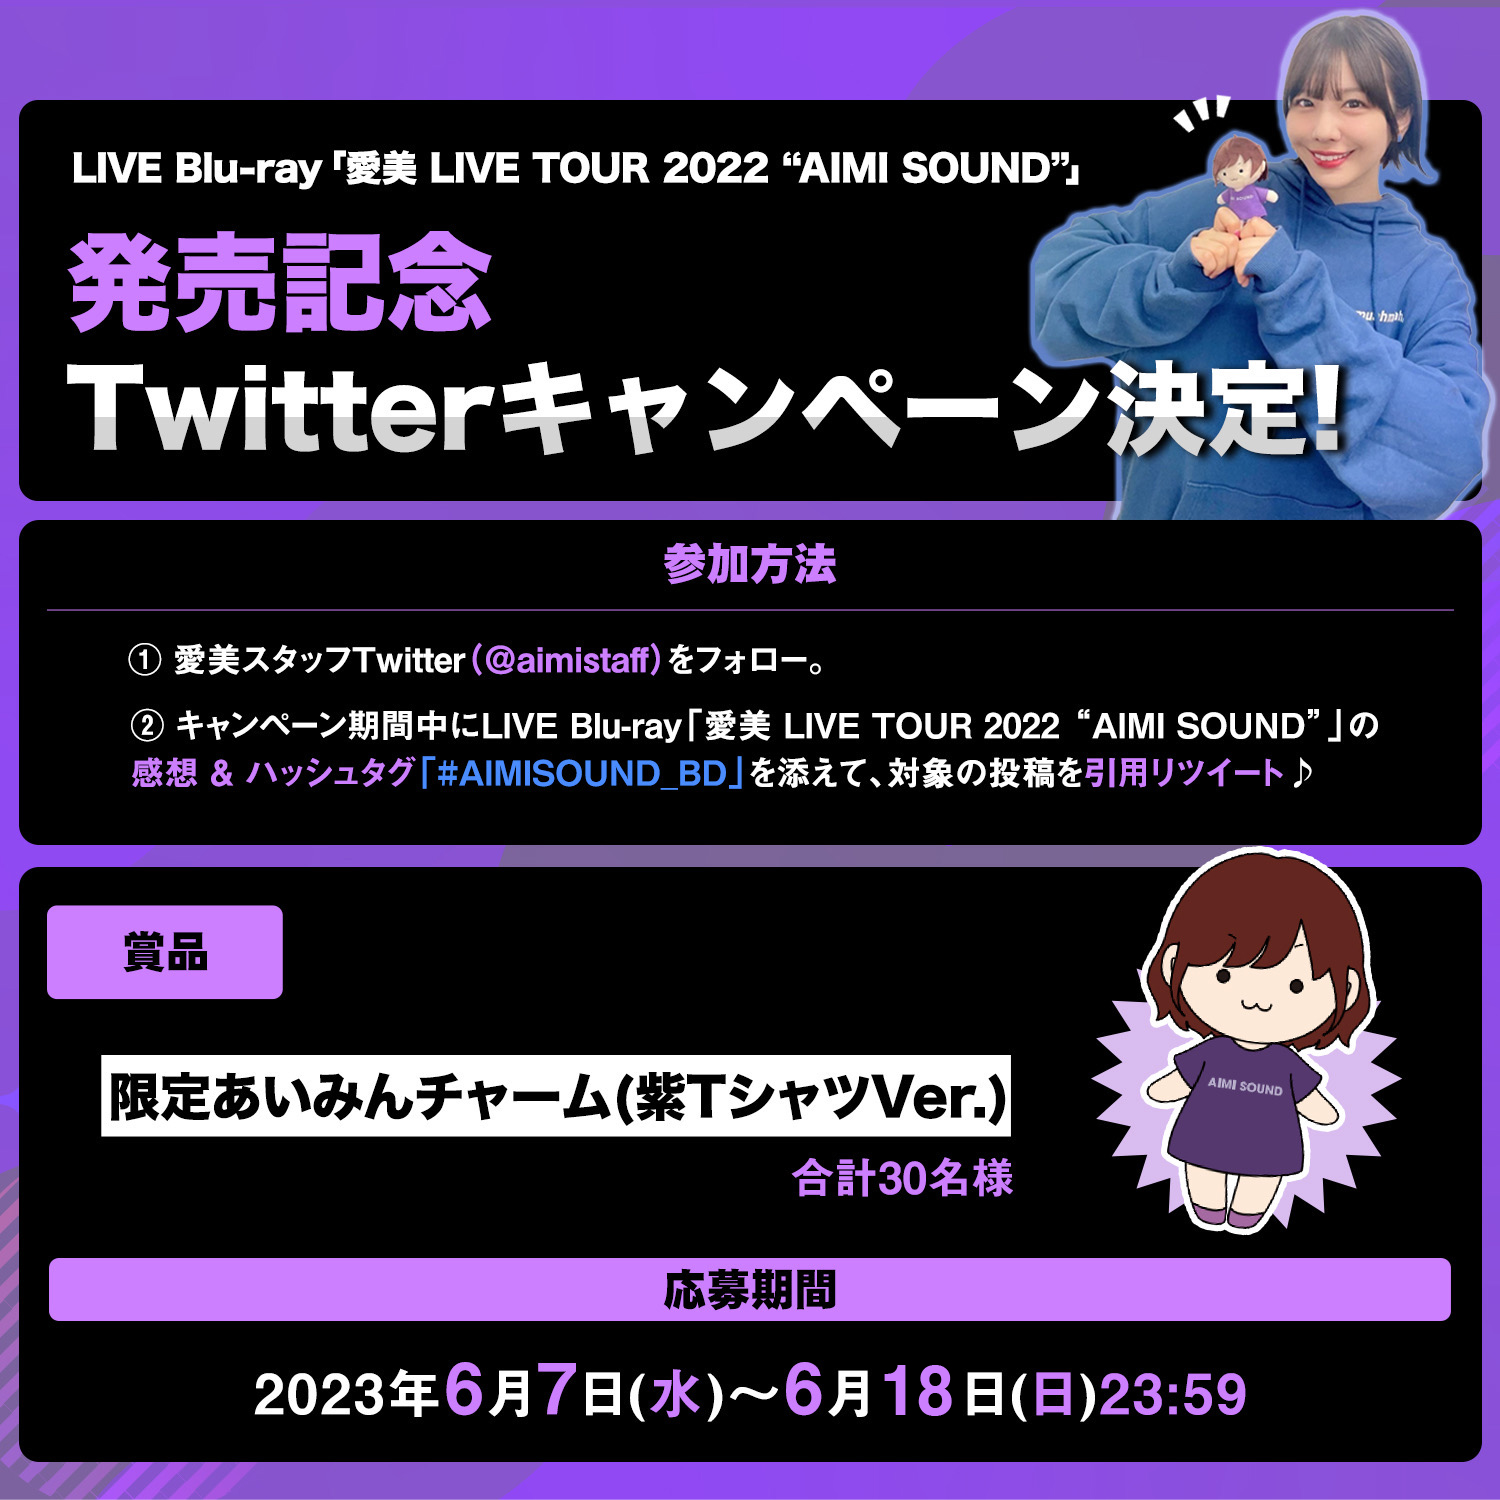 LIVE Blu-ray「愛美 LIVE TOUR 2022 “AIMI SOUND”」発売記念 Twitter